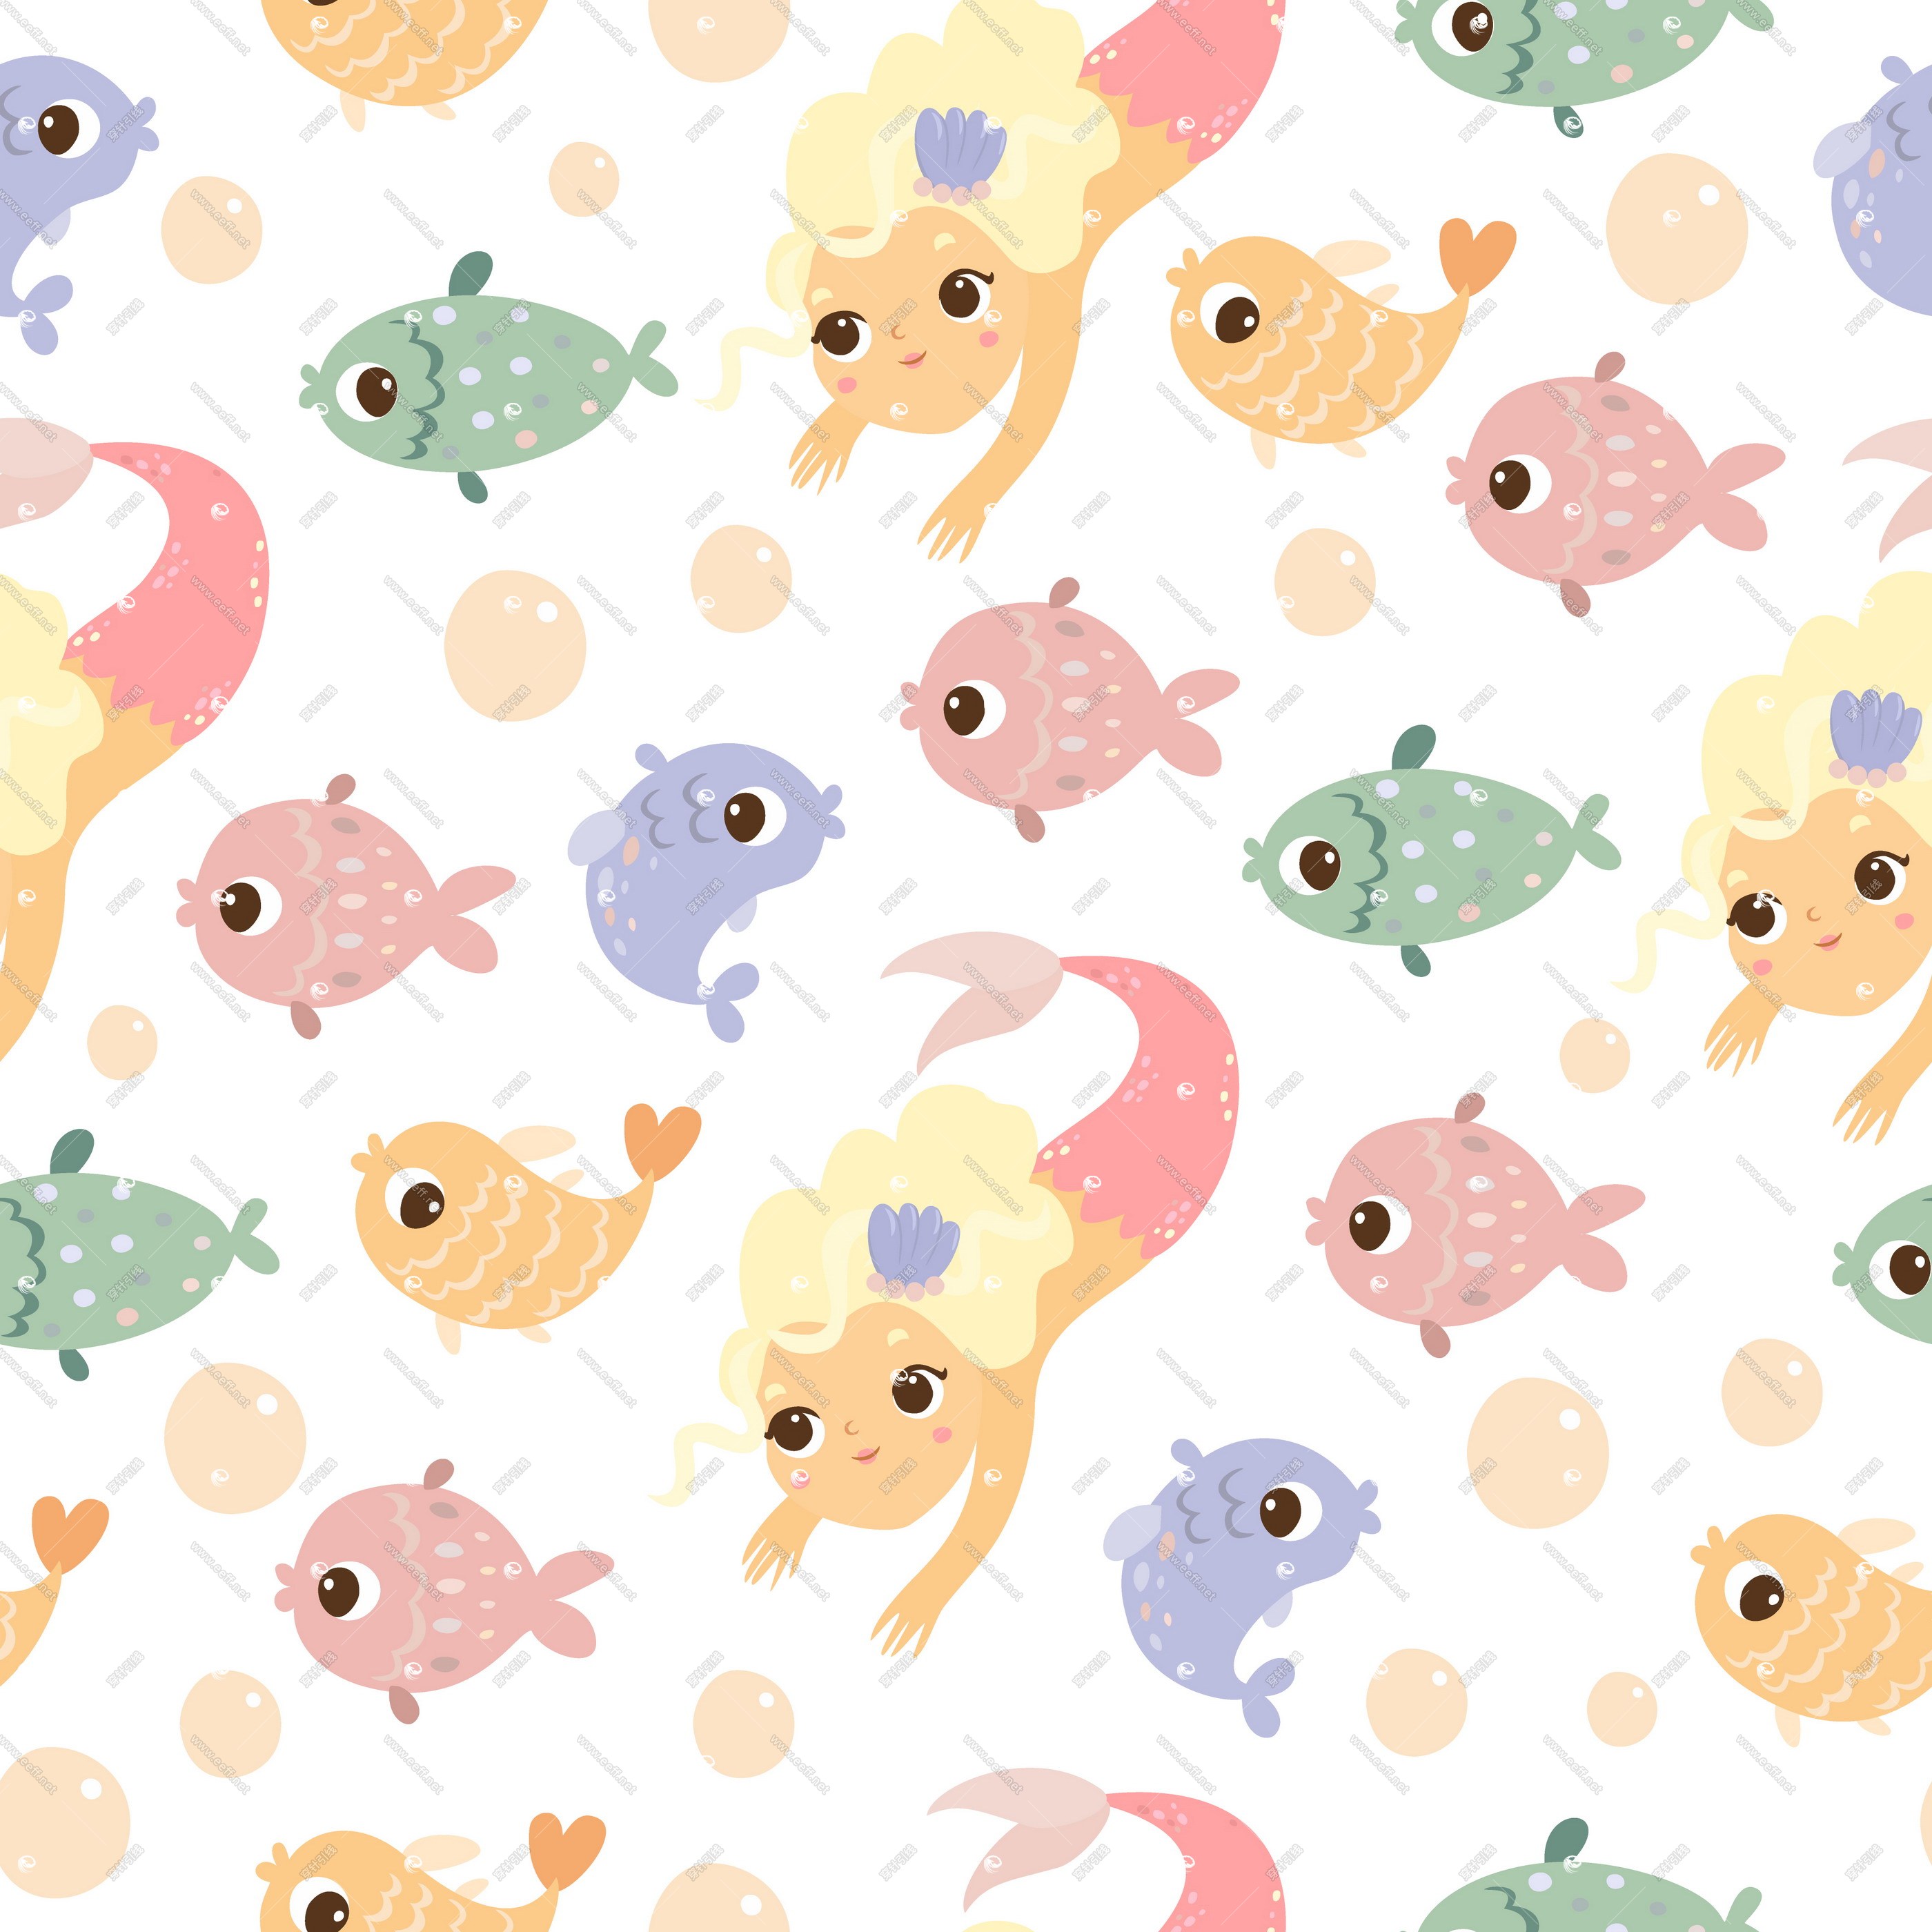 mermaid_and_fish_pattern-1